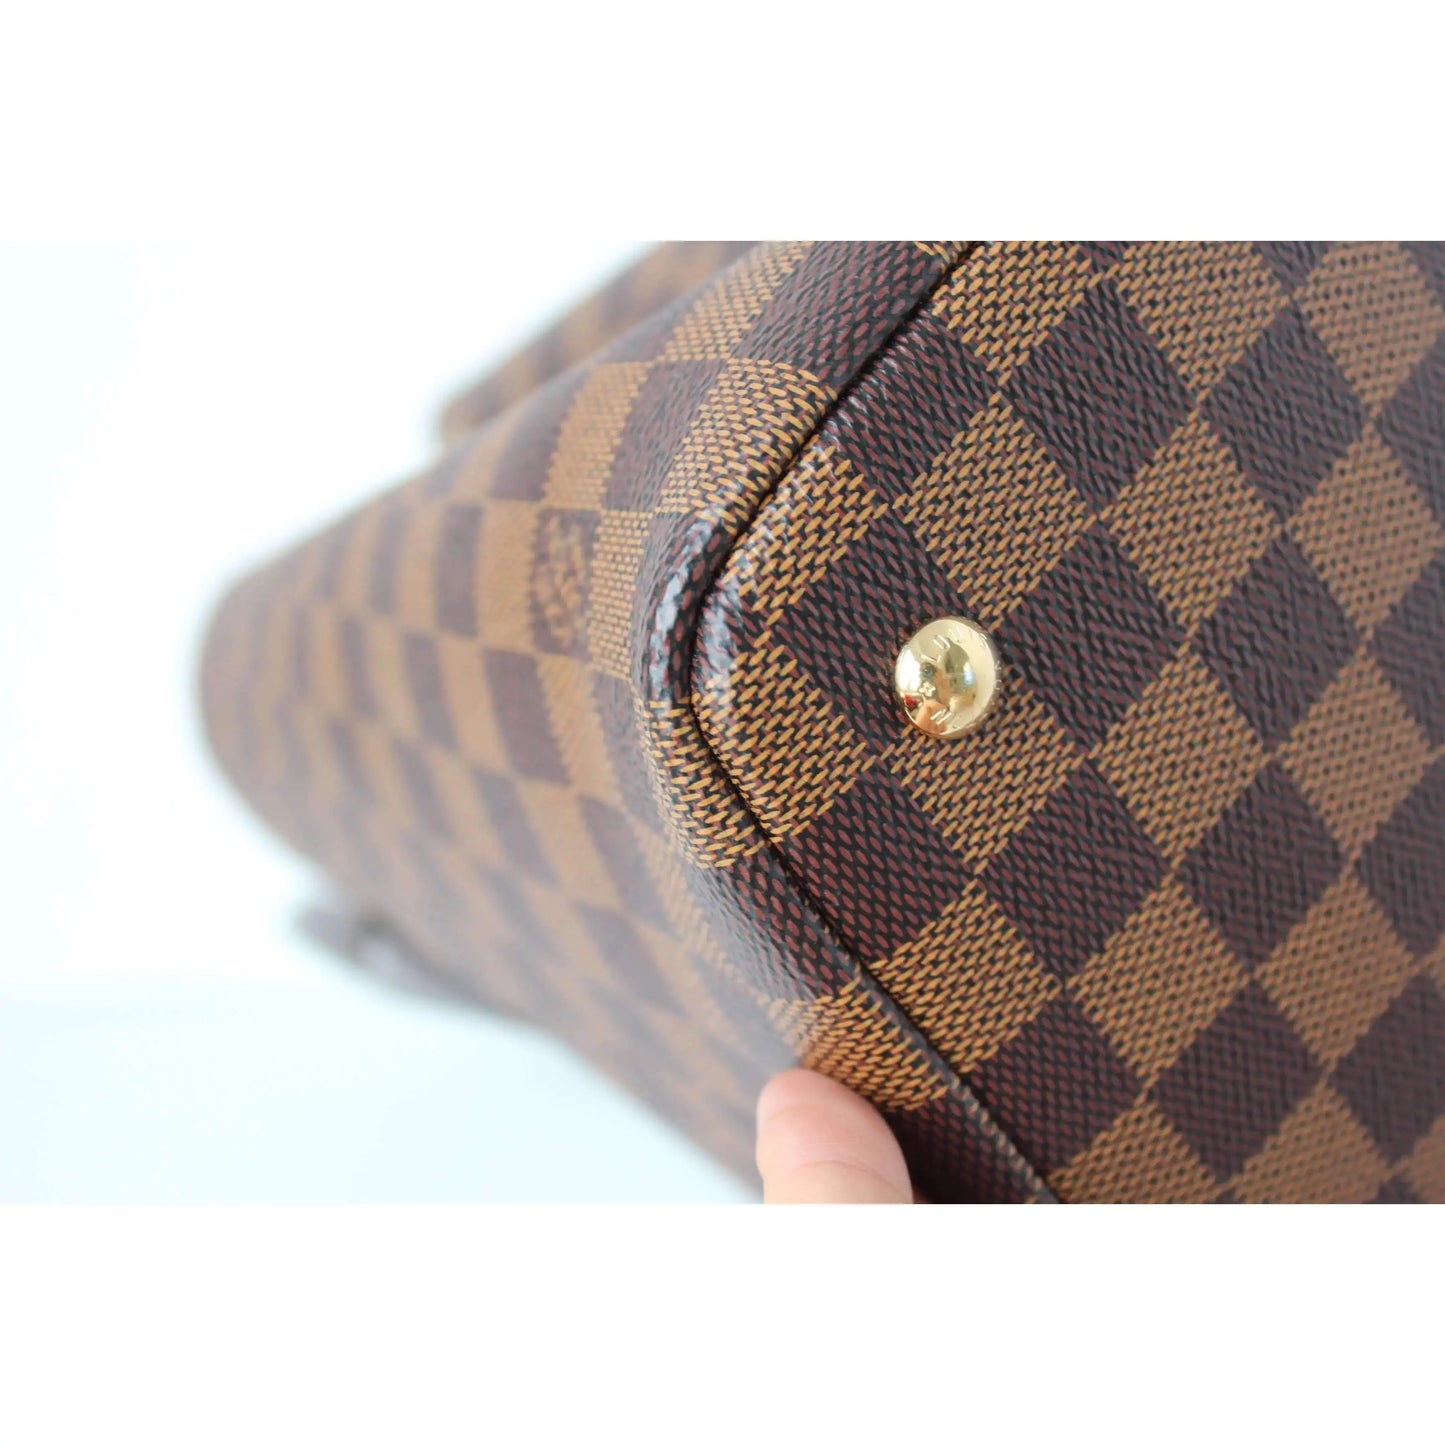 Louis Vuitton Kensington Damier Ebene 2 Way Brown - $1520 - From Fancy